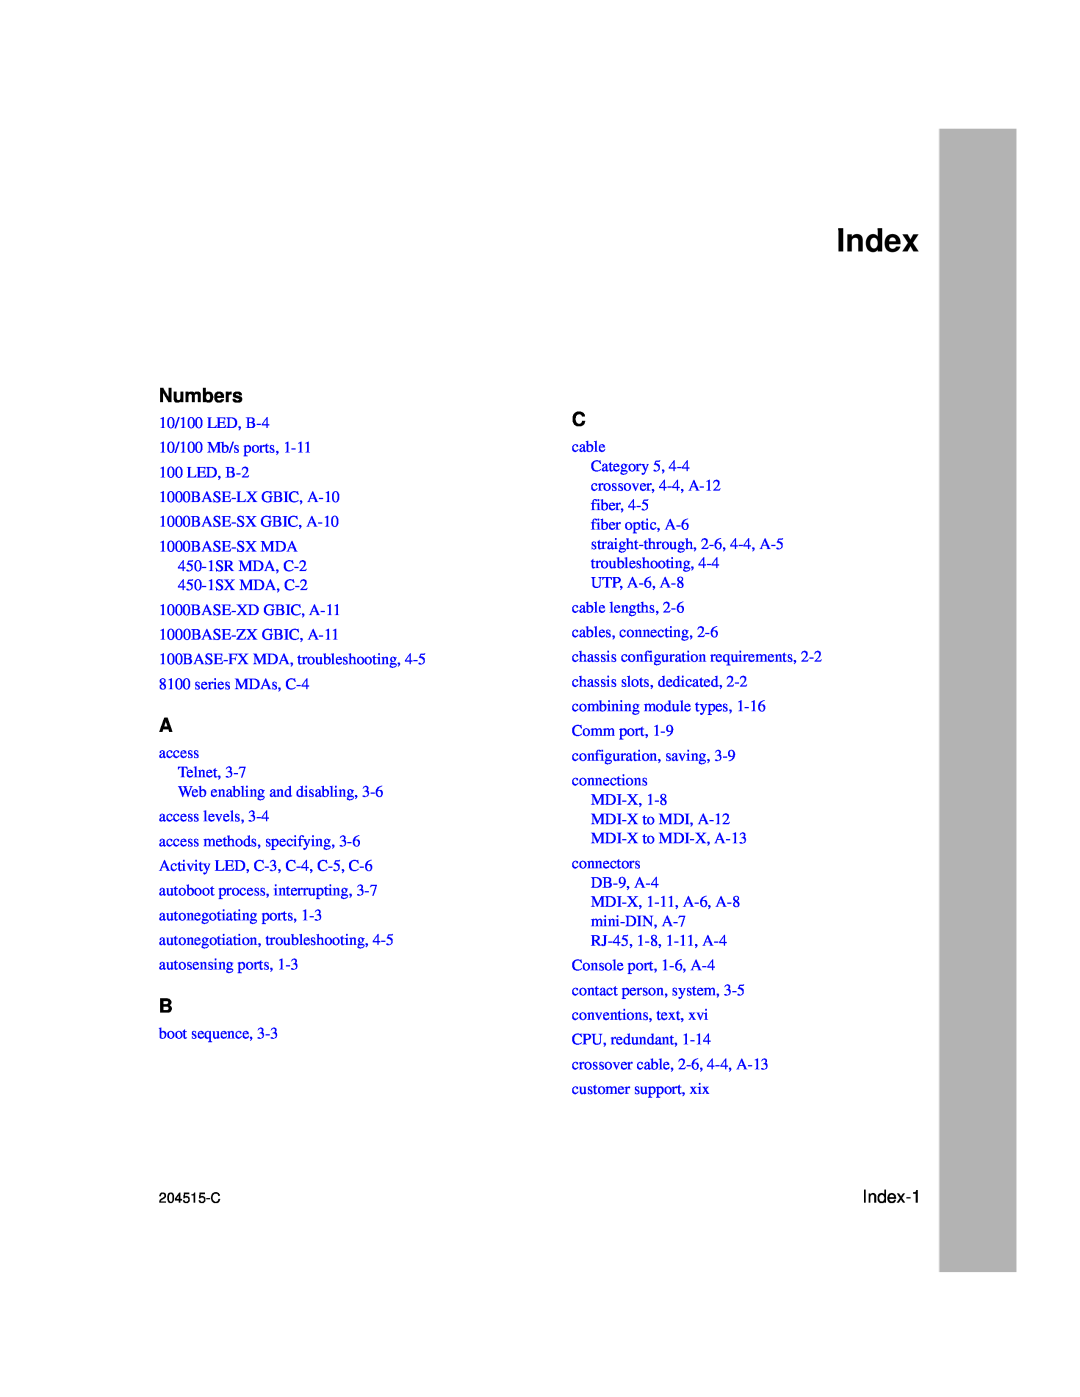 Nortel Networks 1000BASE-XD, 8100 manual Numbers, Index-1 